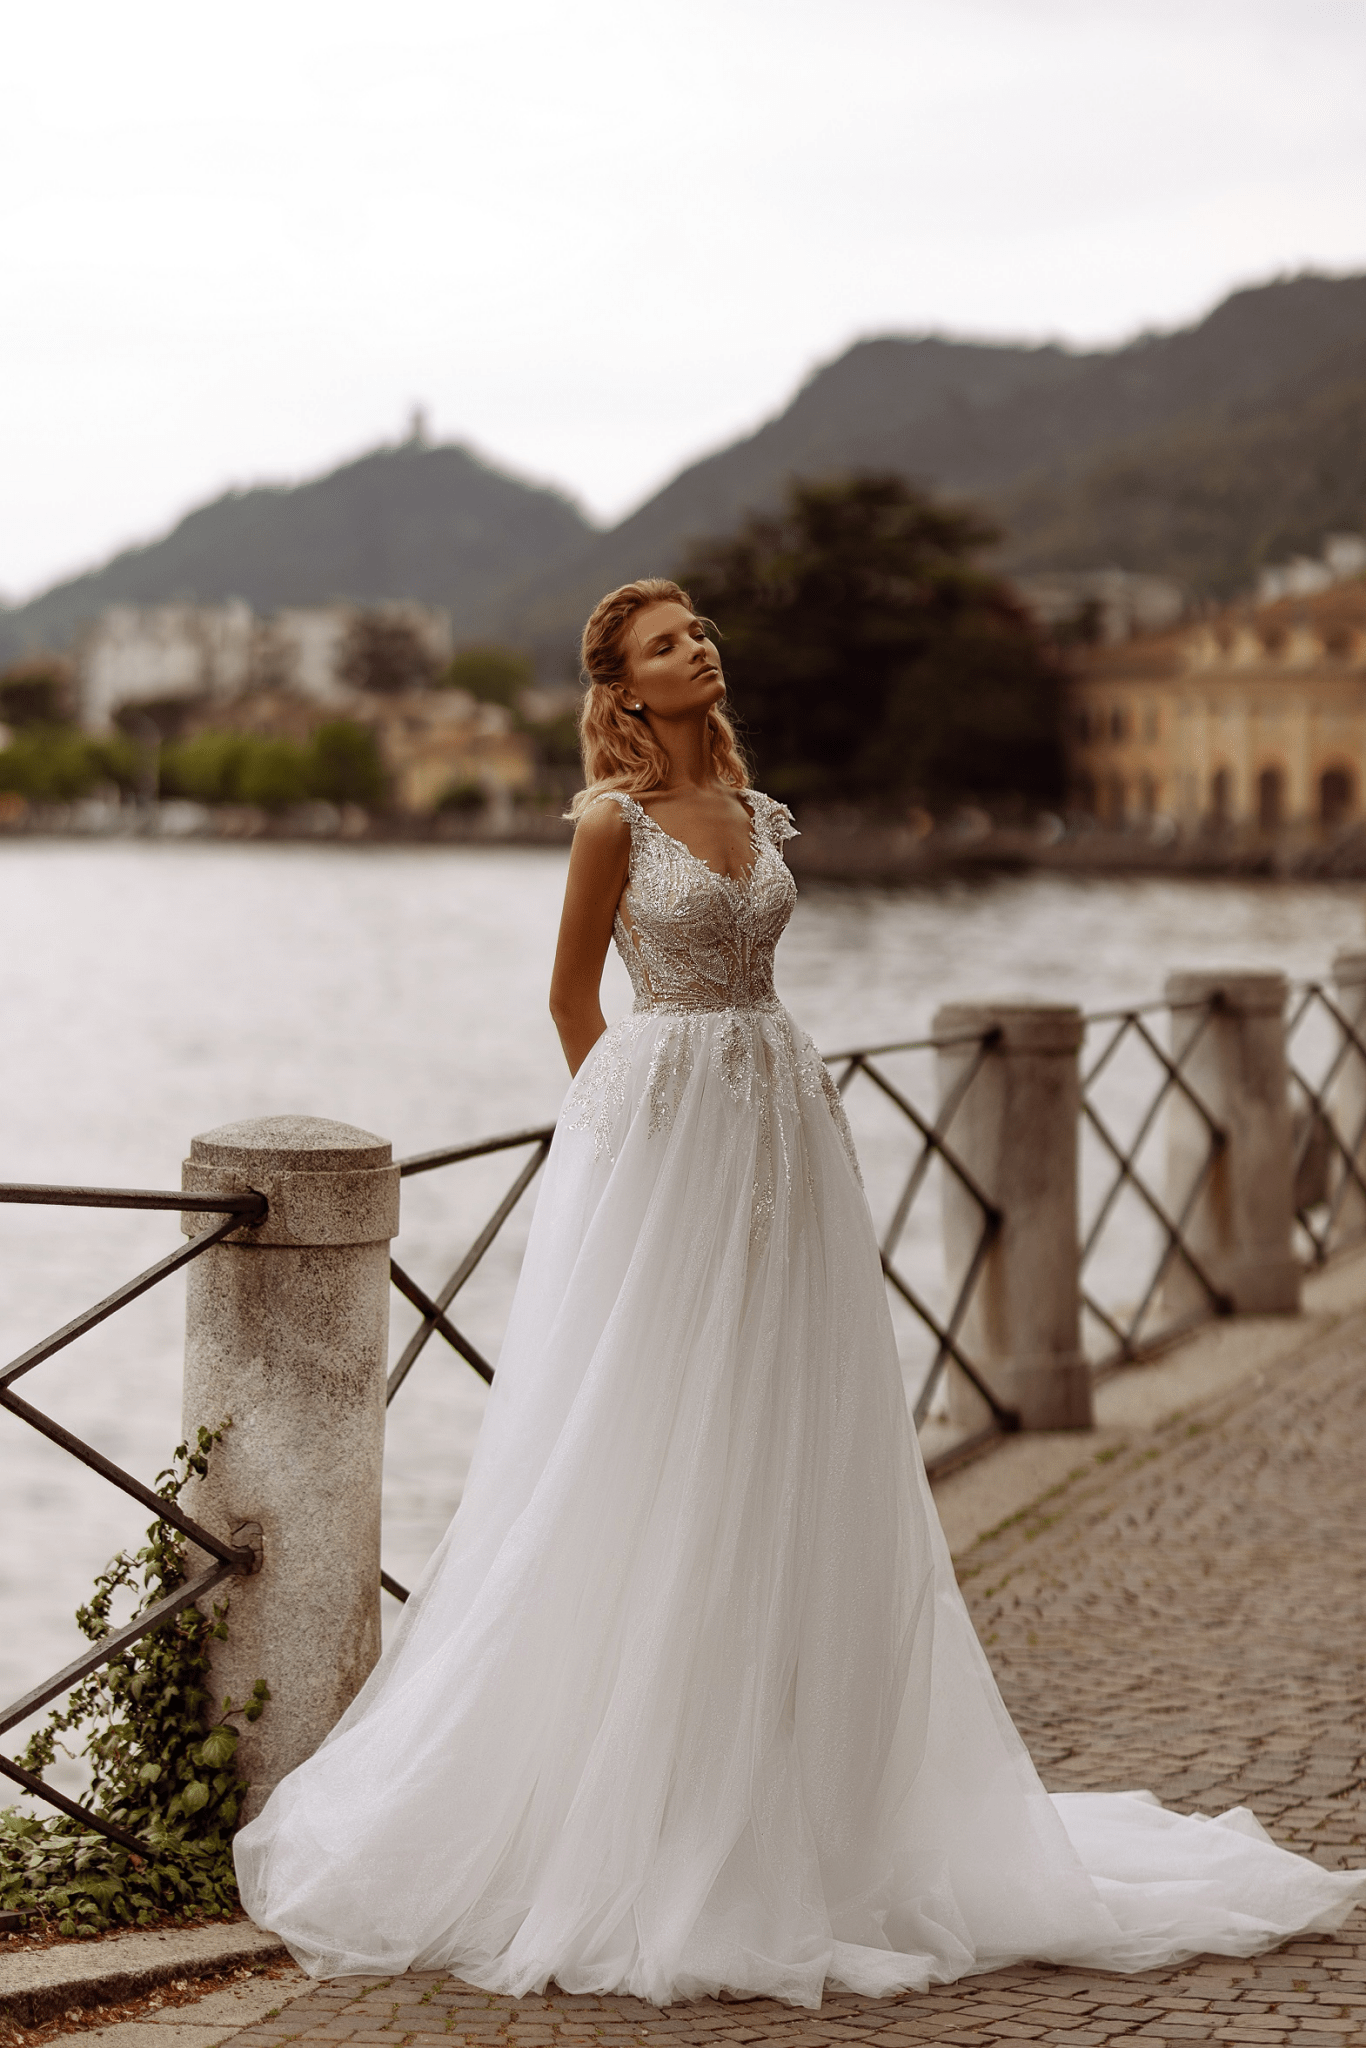 Lace Bodice Wedding Gown - Aline Wedding Dress with Lace Sleeves - Sleeveless Ball Gown Wedding Dress Plus Size - WonderlandByLilian